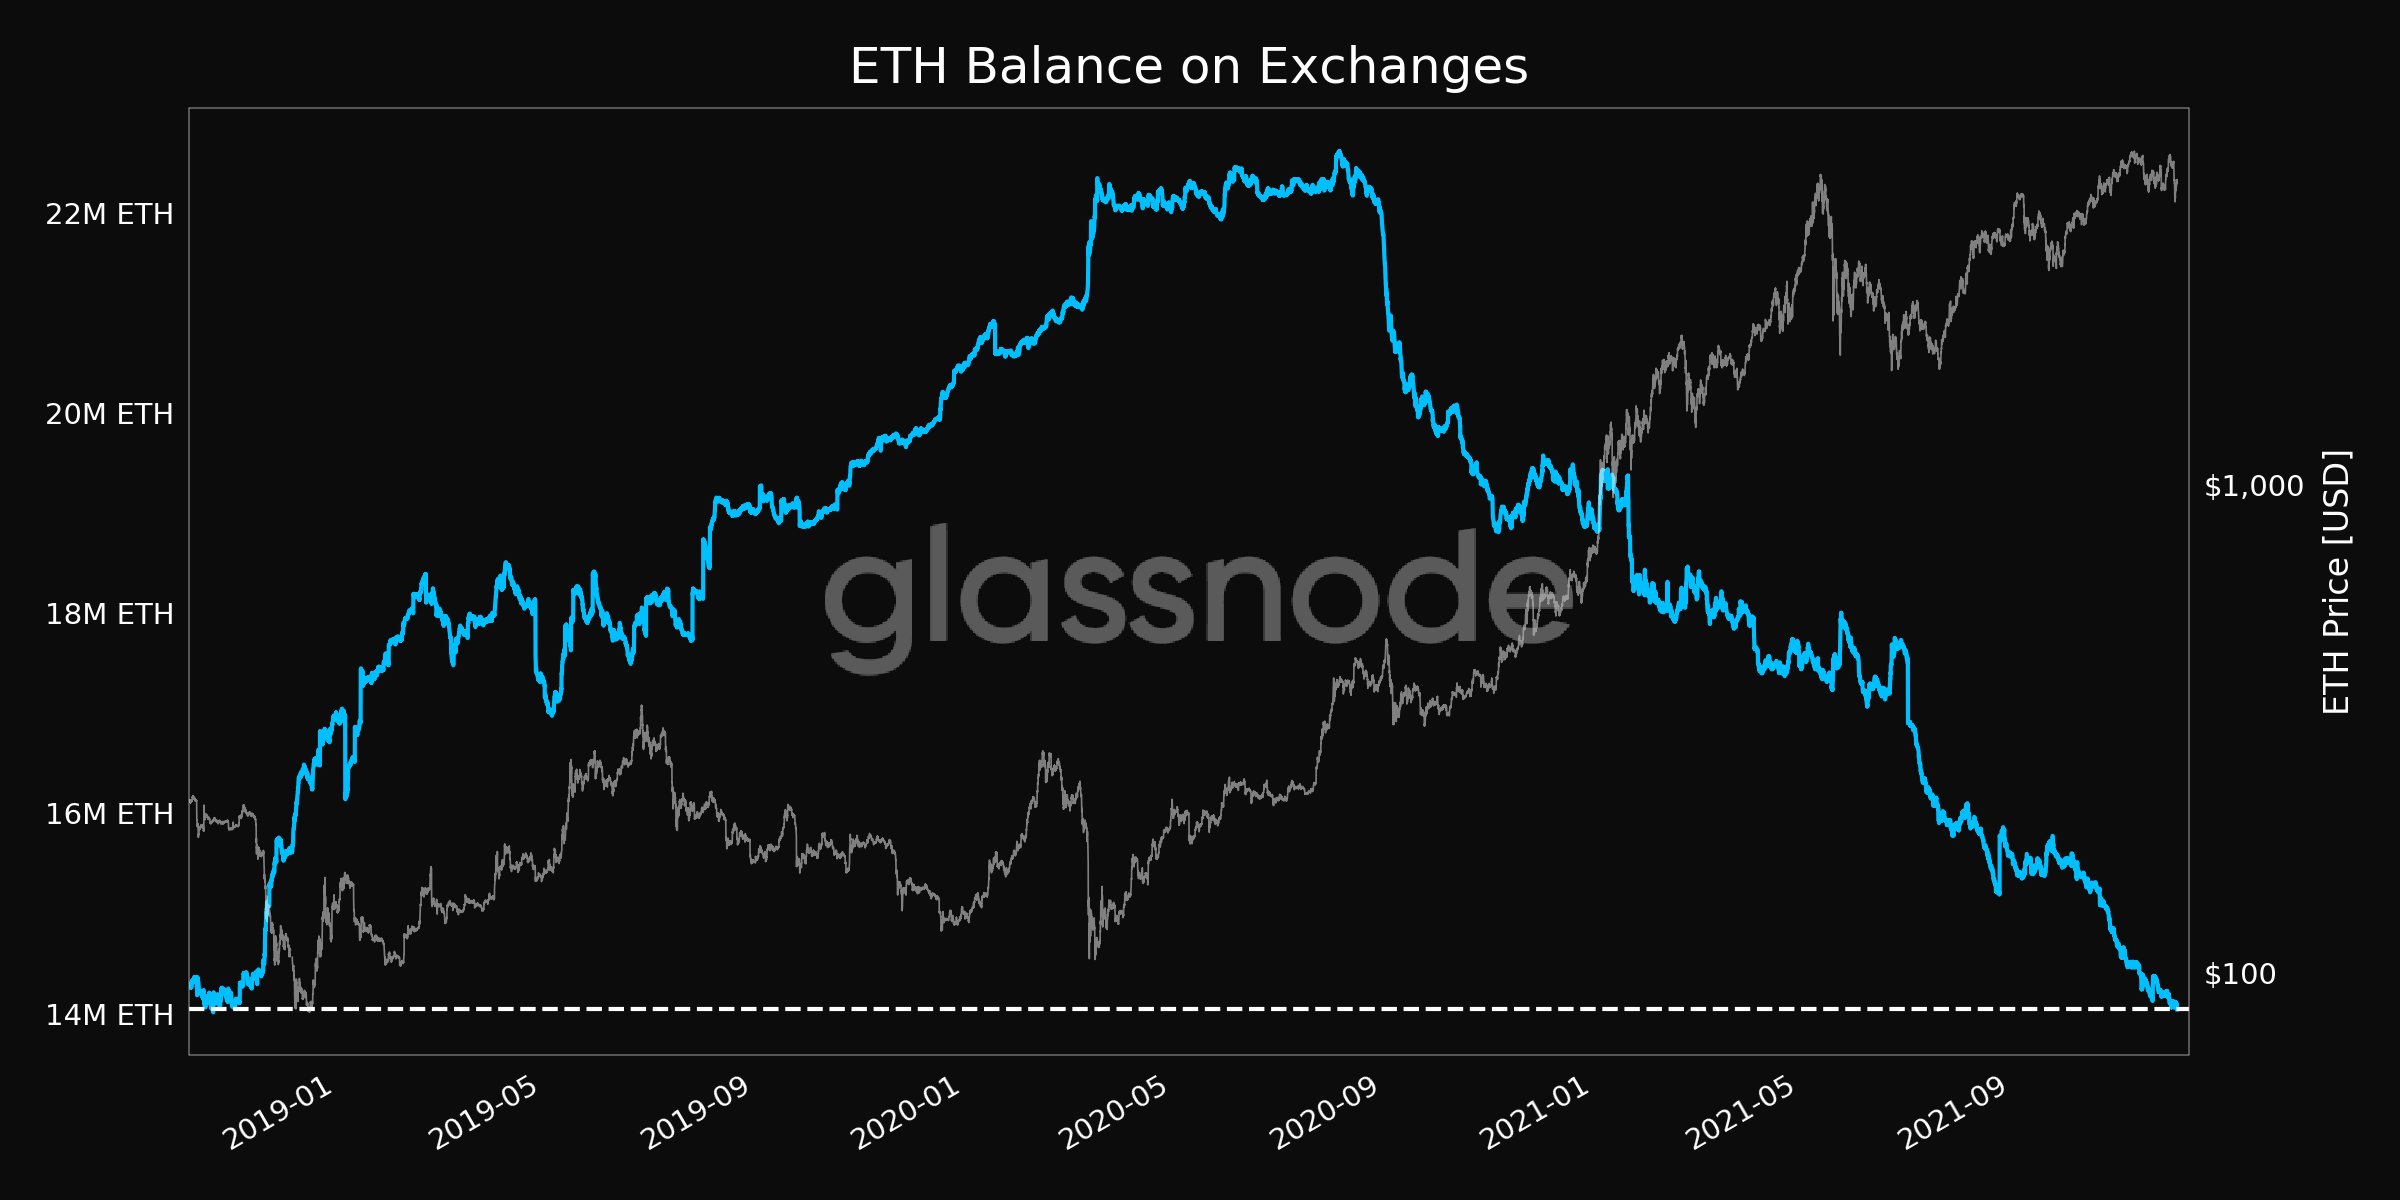 Ethereum Exchange Balances Fall to Three-Year Low